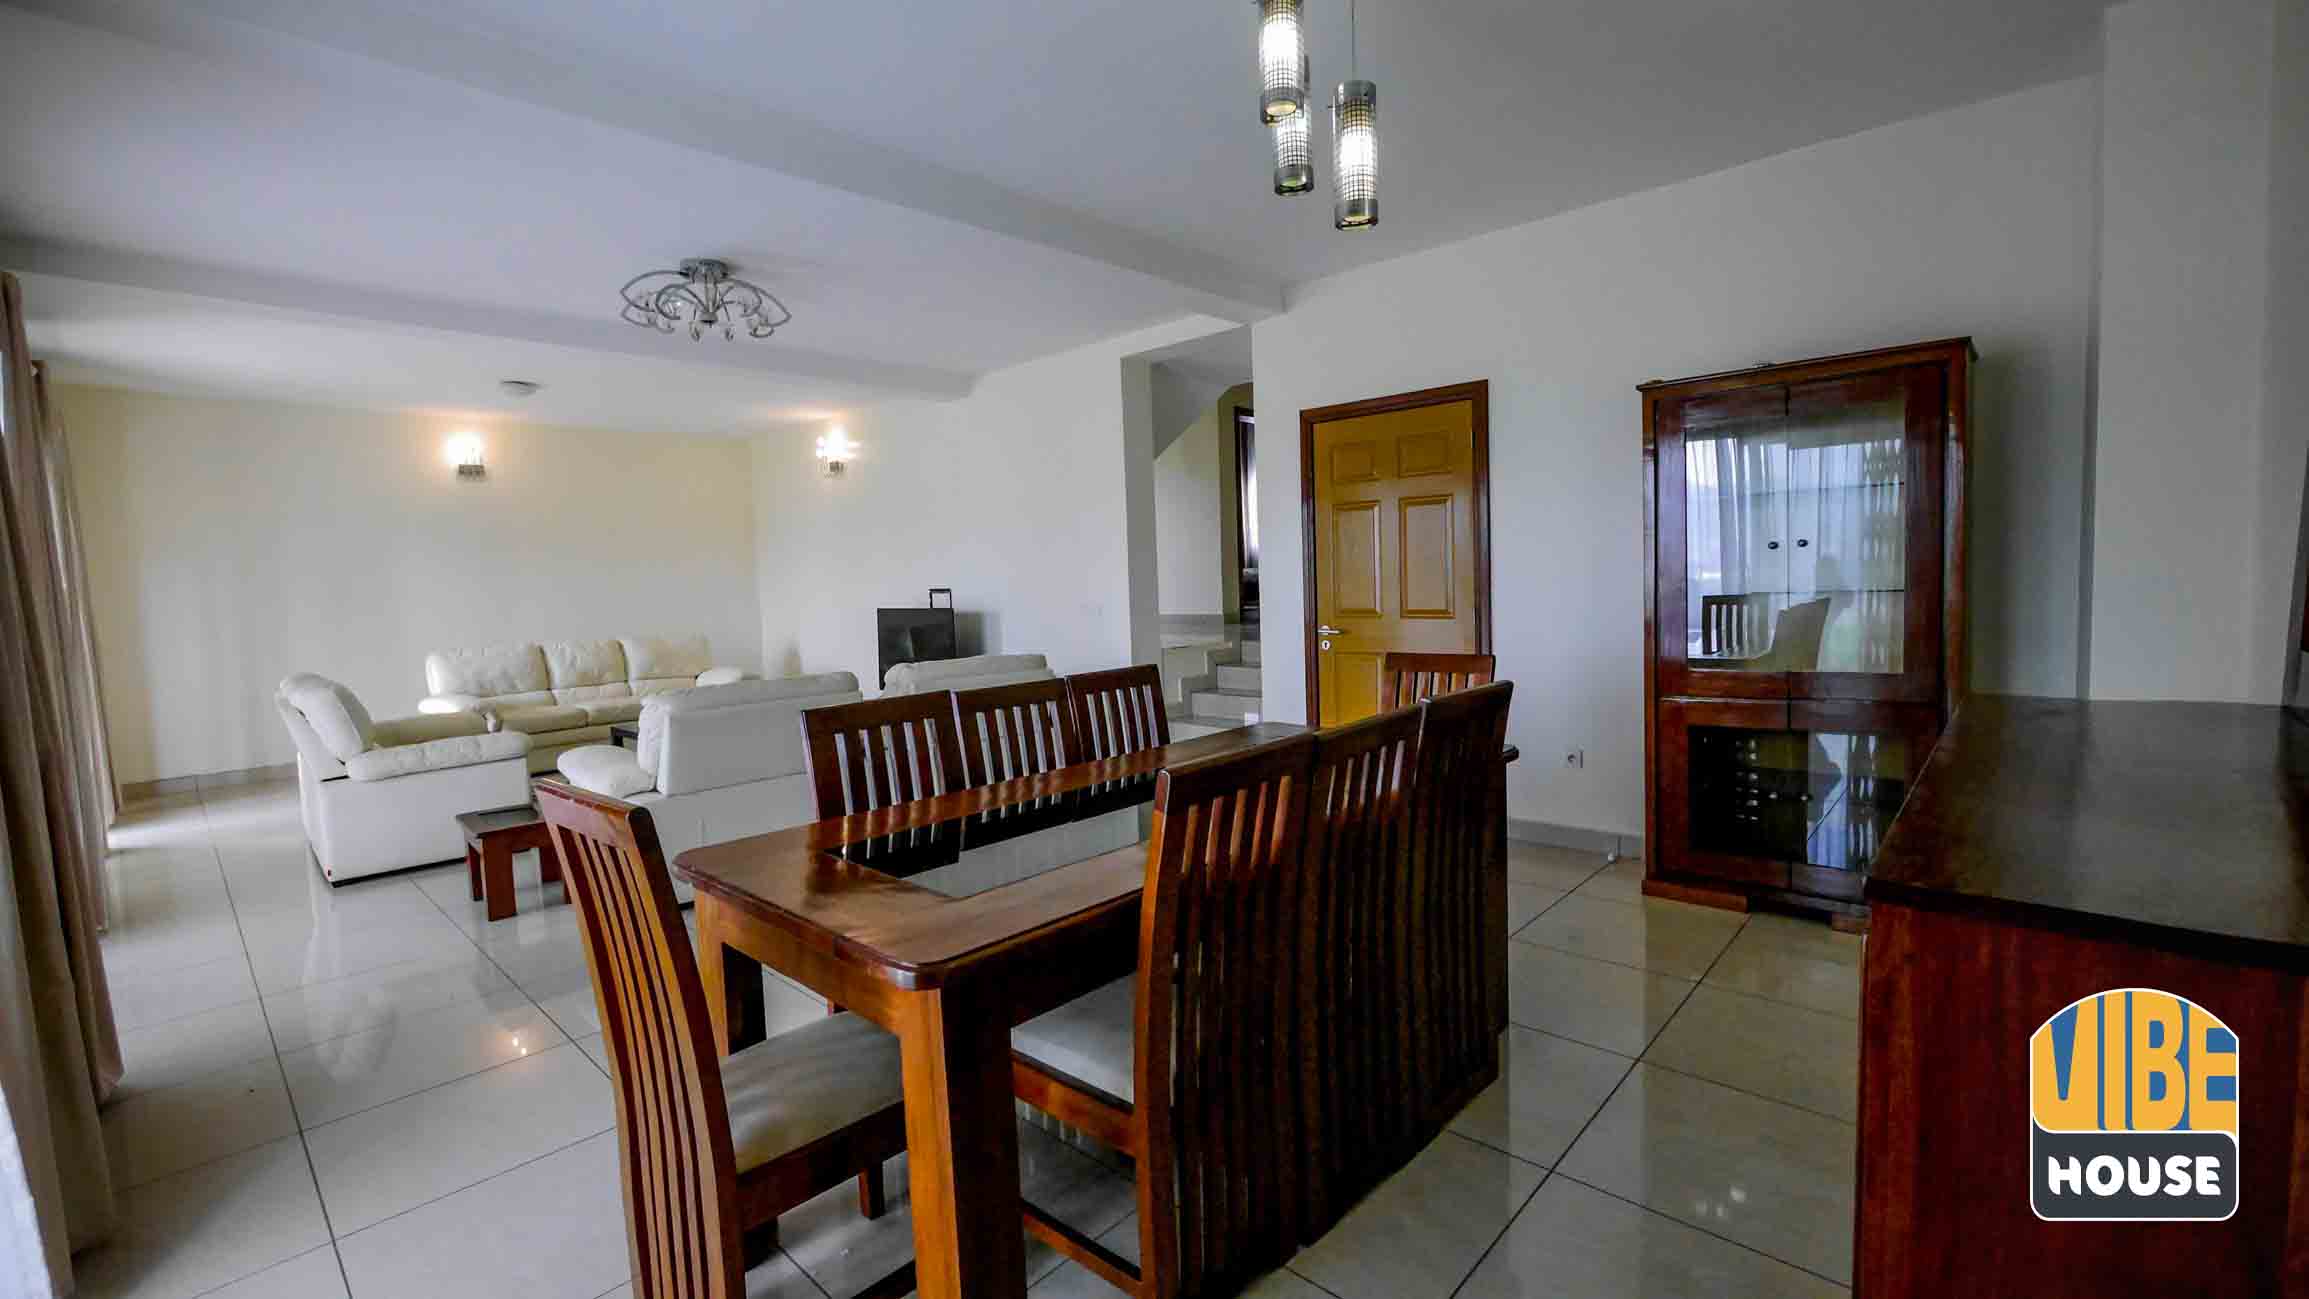 Elegant living room in house for rent in Kibagabaga, Kigali